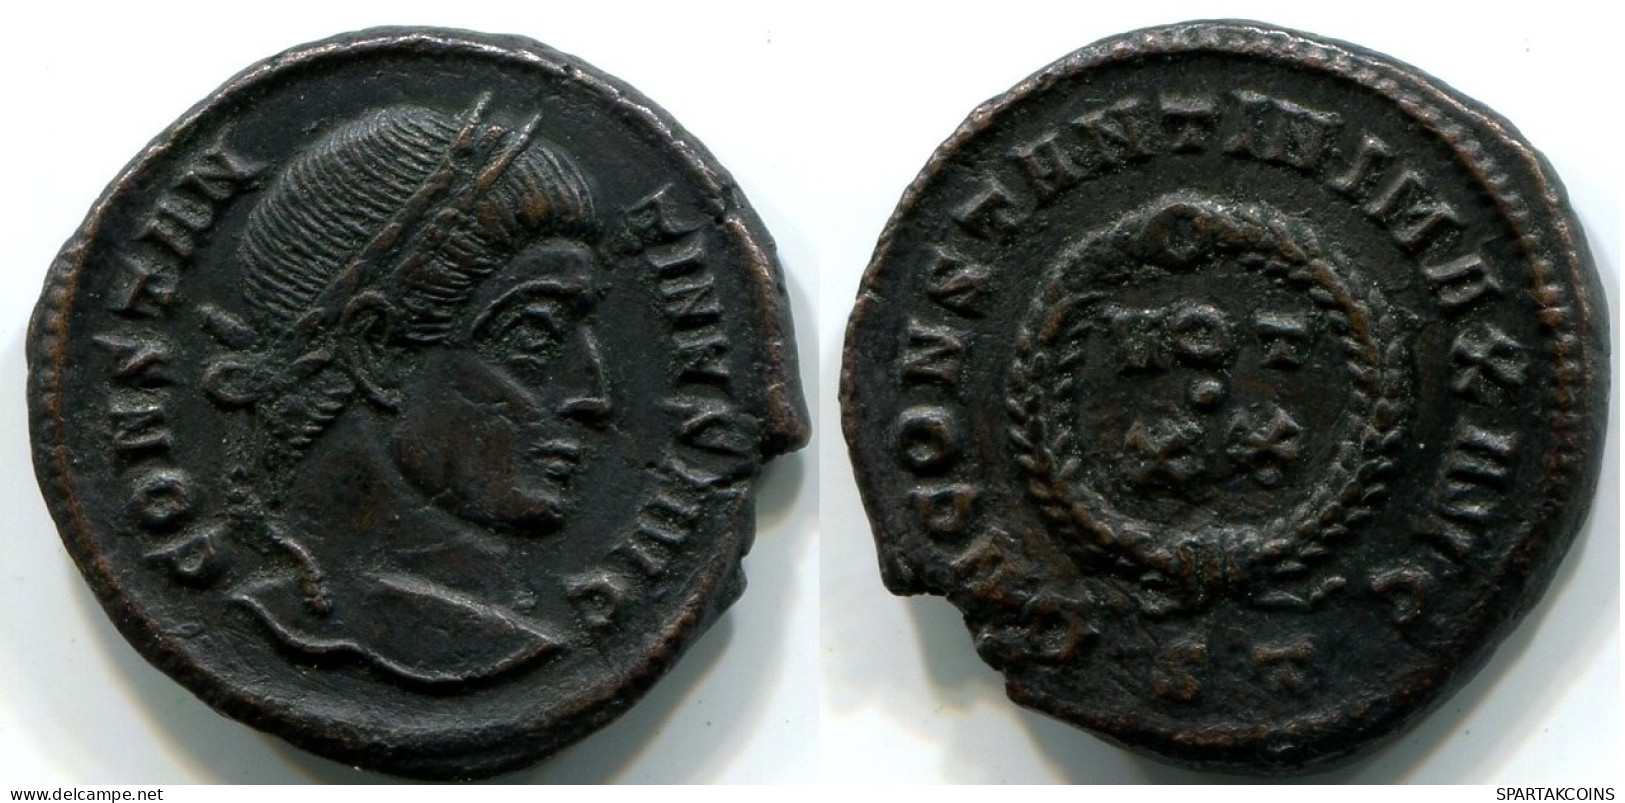 CONSTANTINE I Ticinum Mint ST AD 320-321 D N CONSTANTINI MAX AVG #ANC12447.16.E.A - El Imperio Christiano (307 / 363)